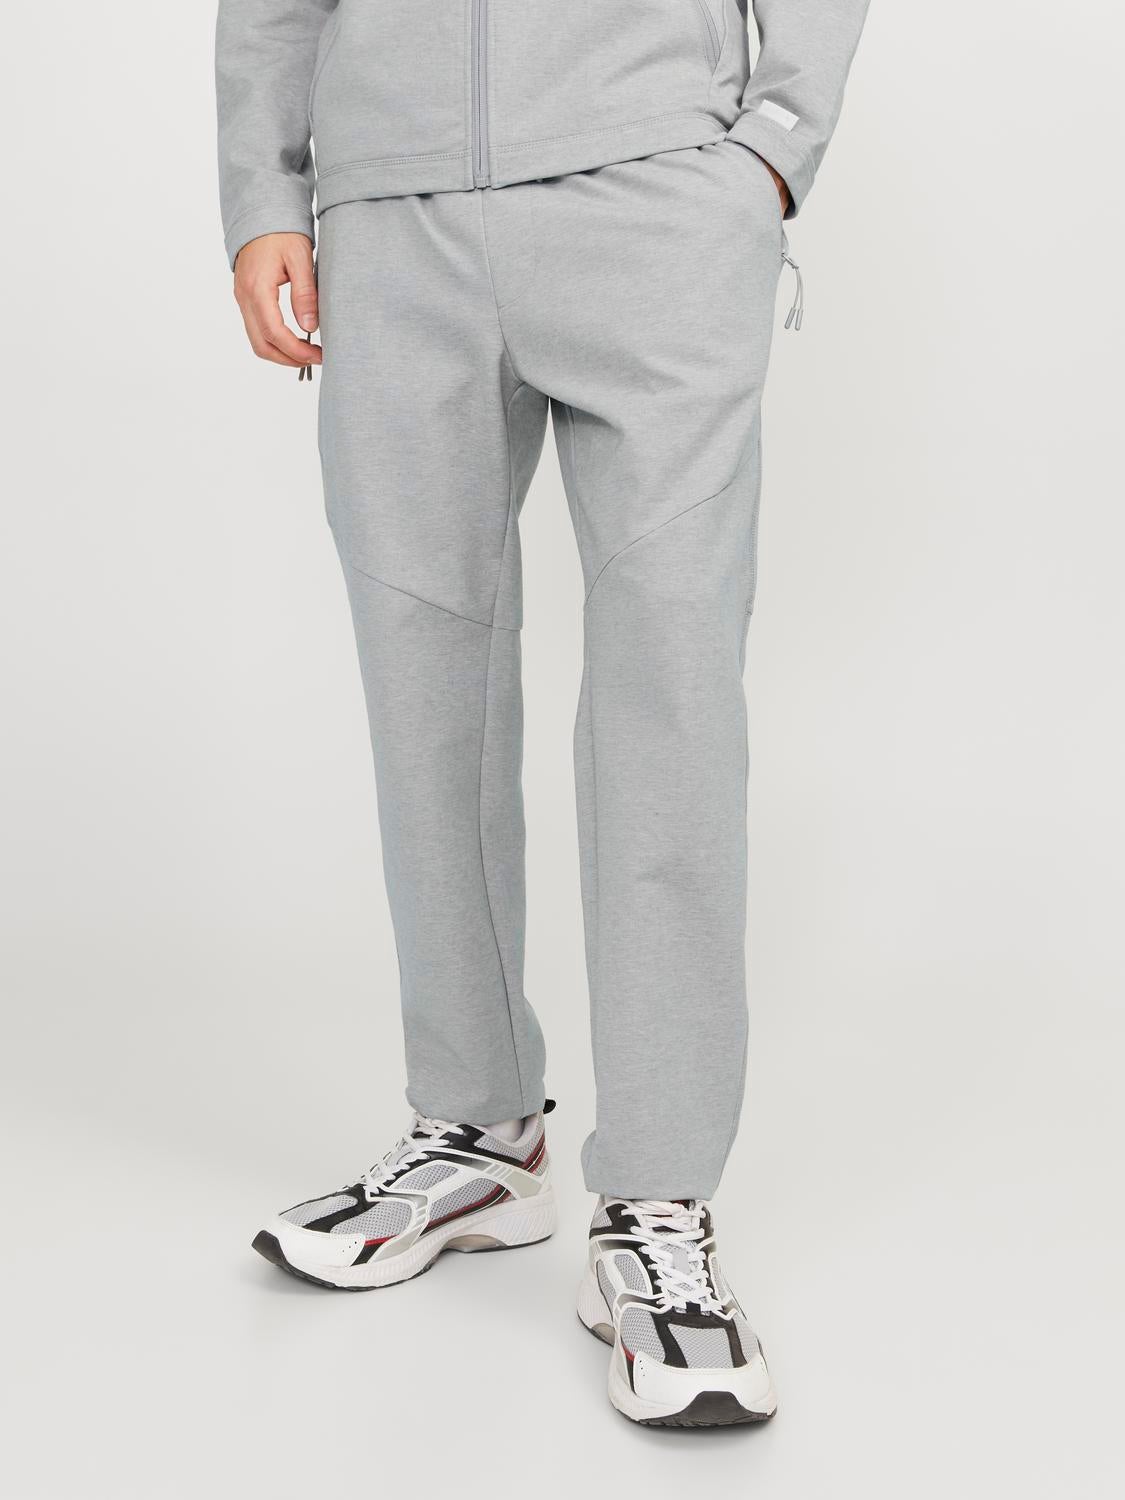 Nike Men Grey Track Pants - Buy Nike Men Grey Track Pants online in India